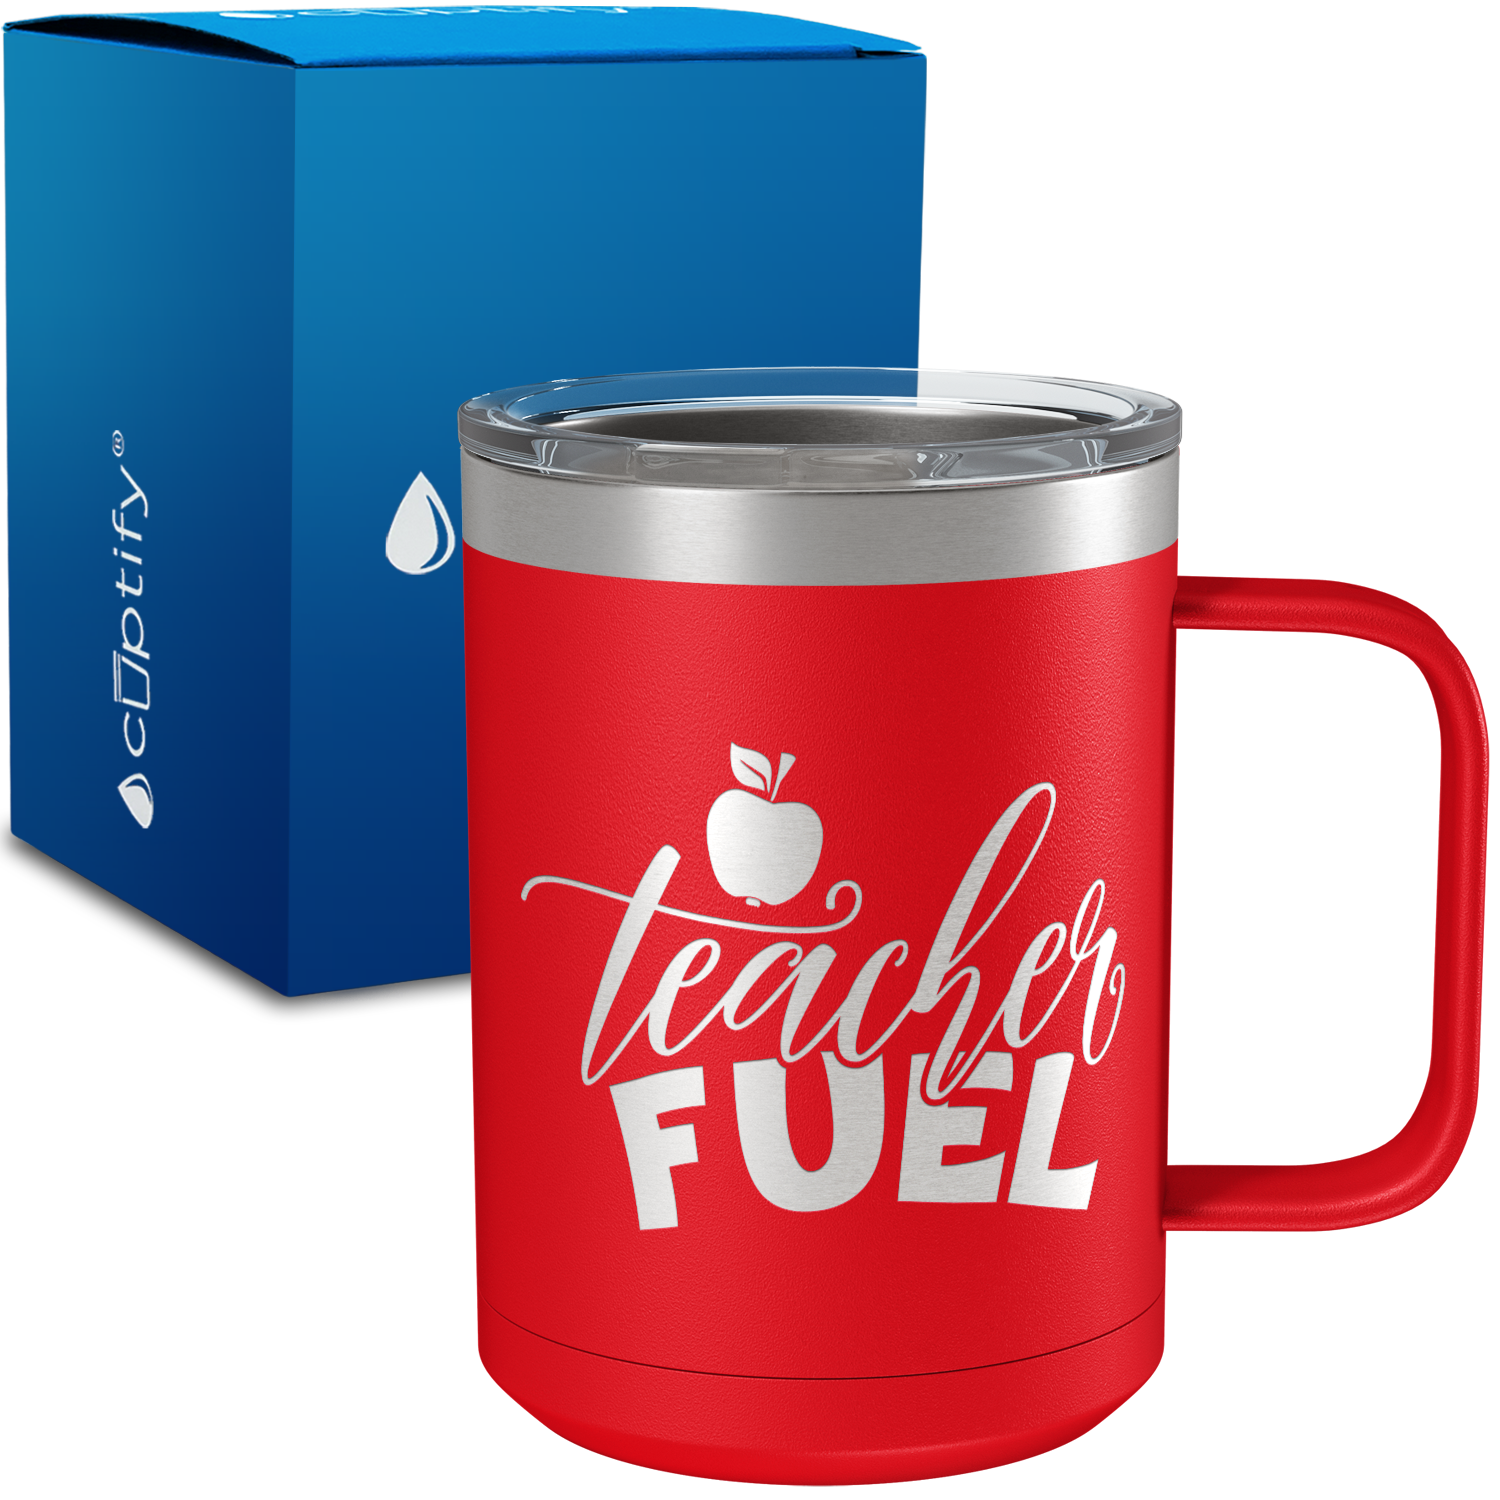 Teacher Fuel 15oz Stainless Steel Mug